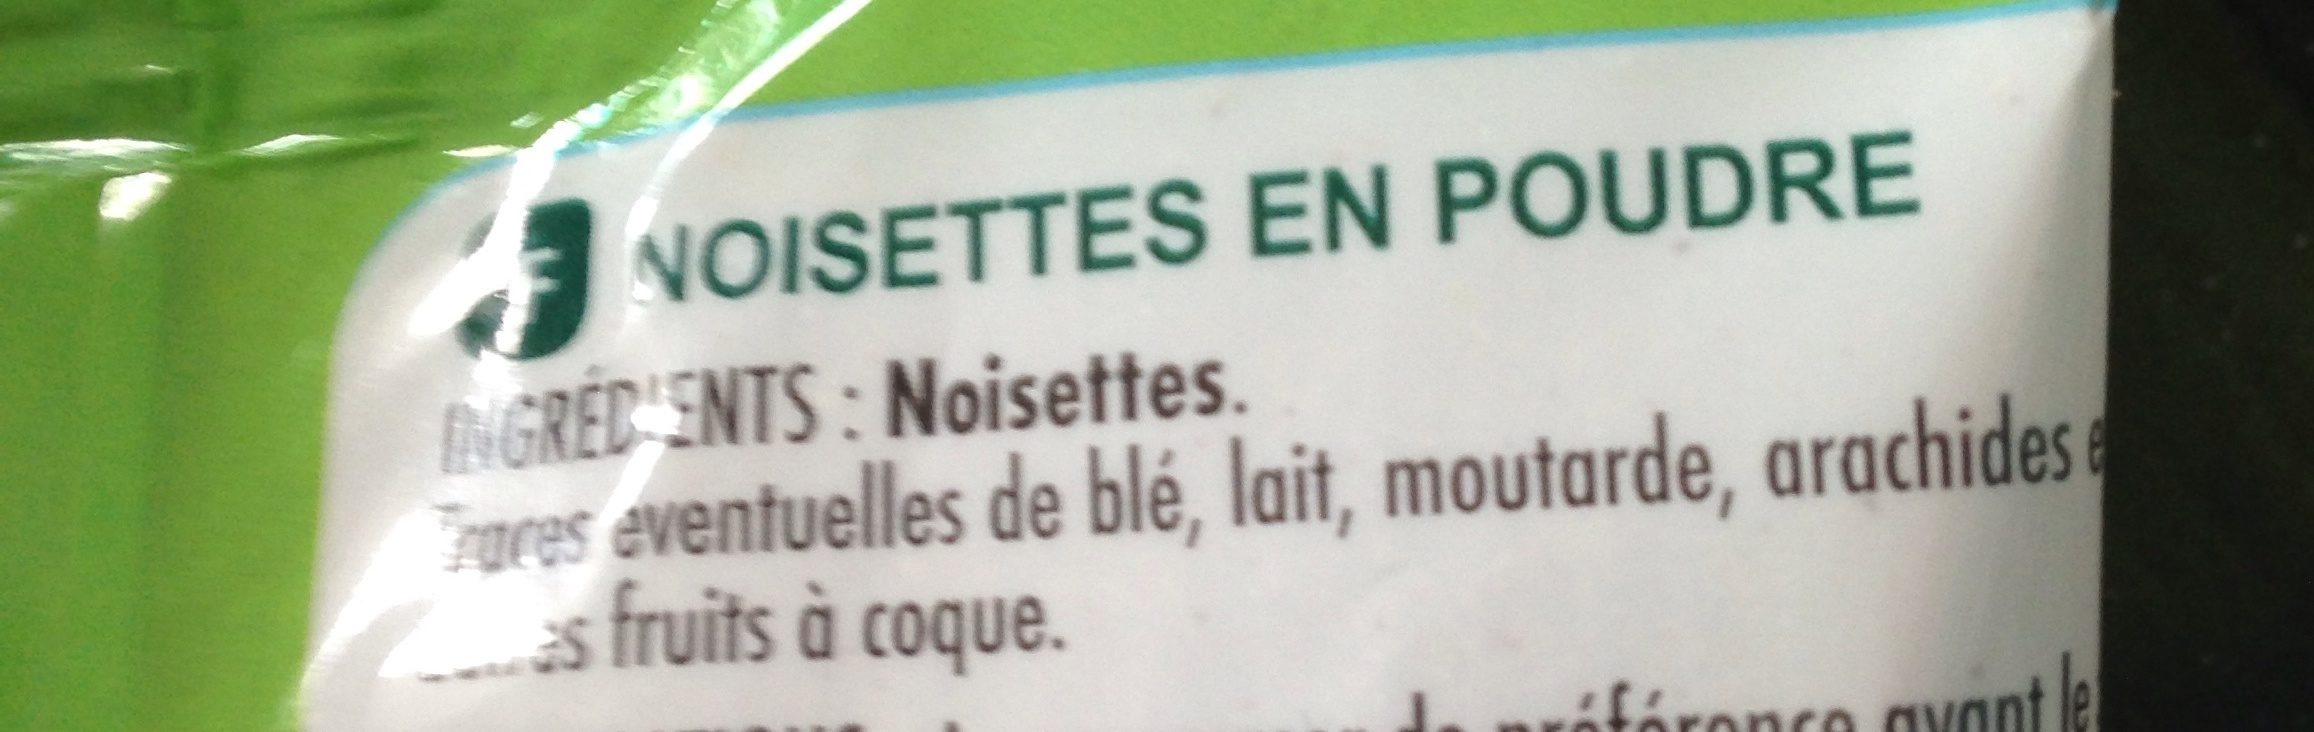 Noisettes en poudre - Ingrediënten - fr